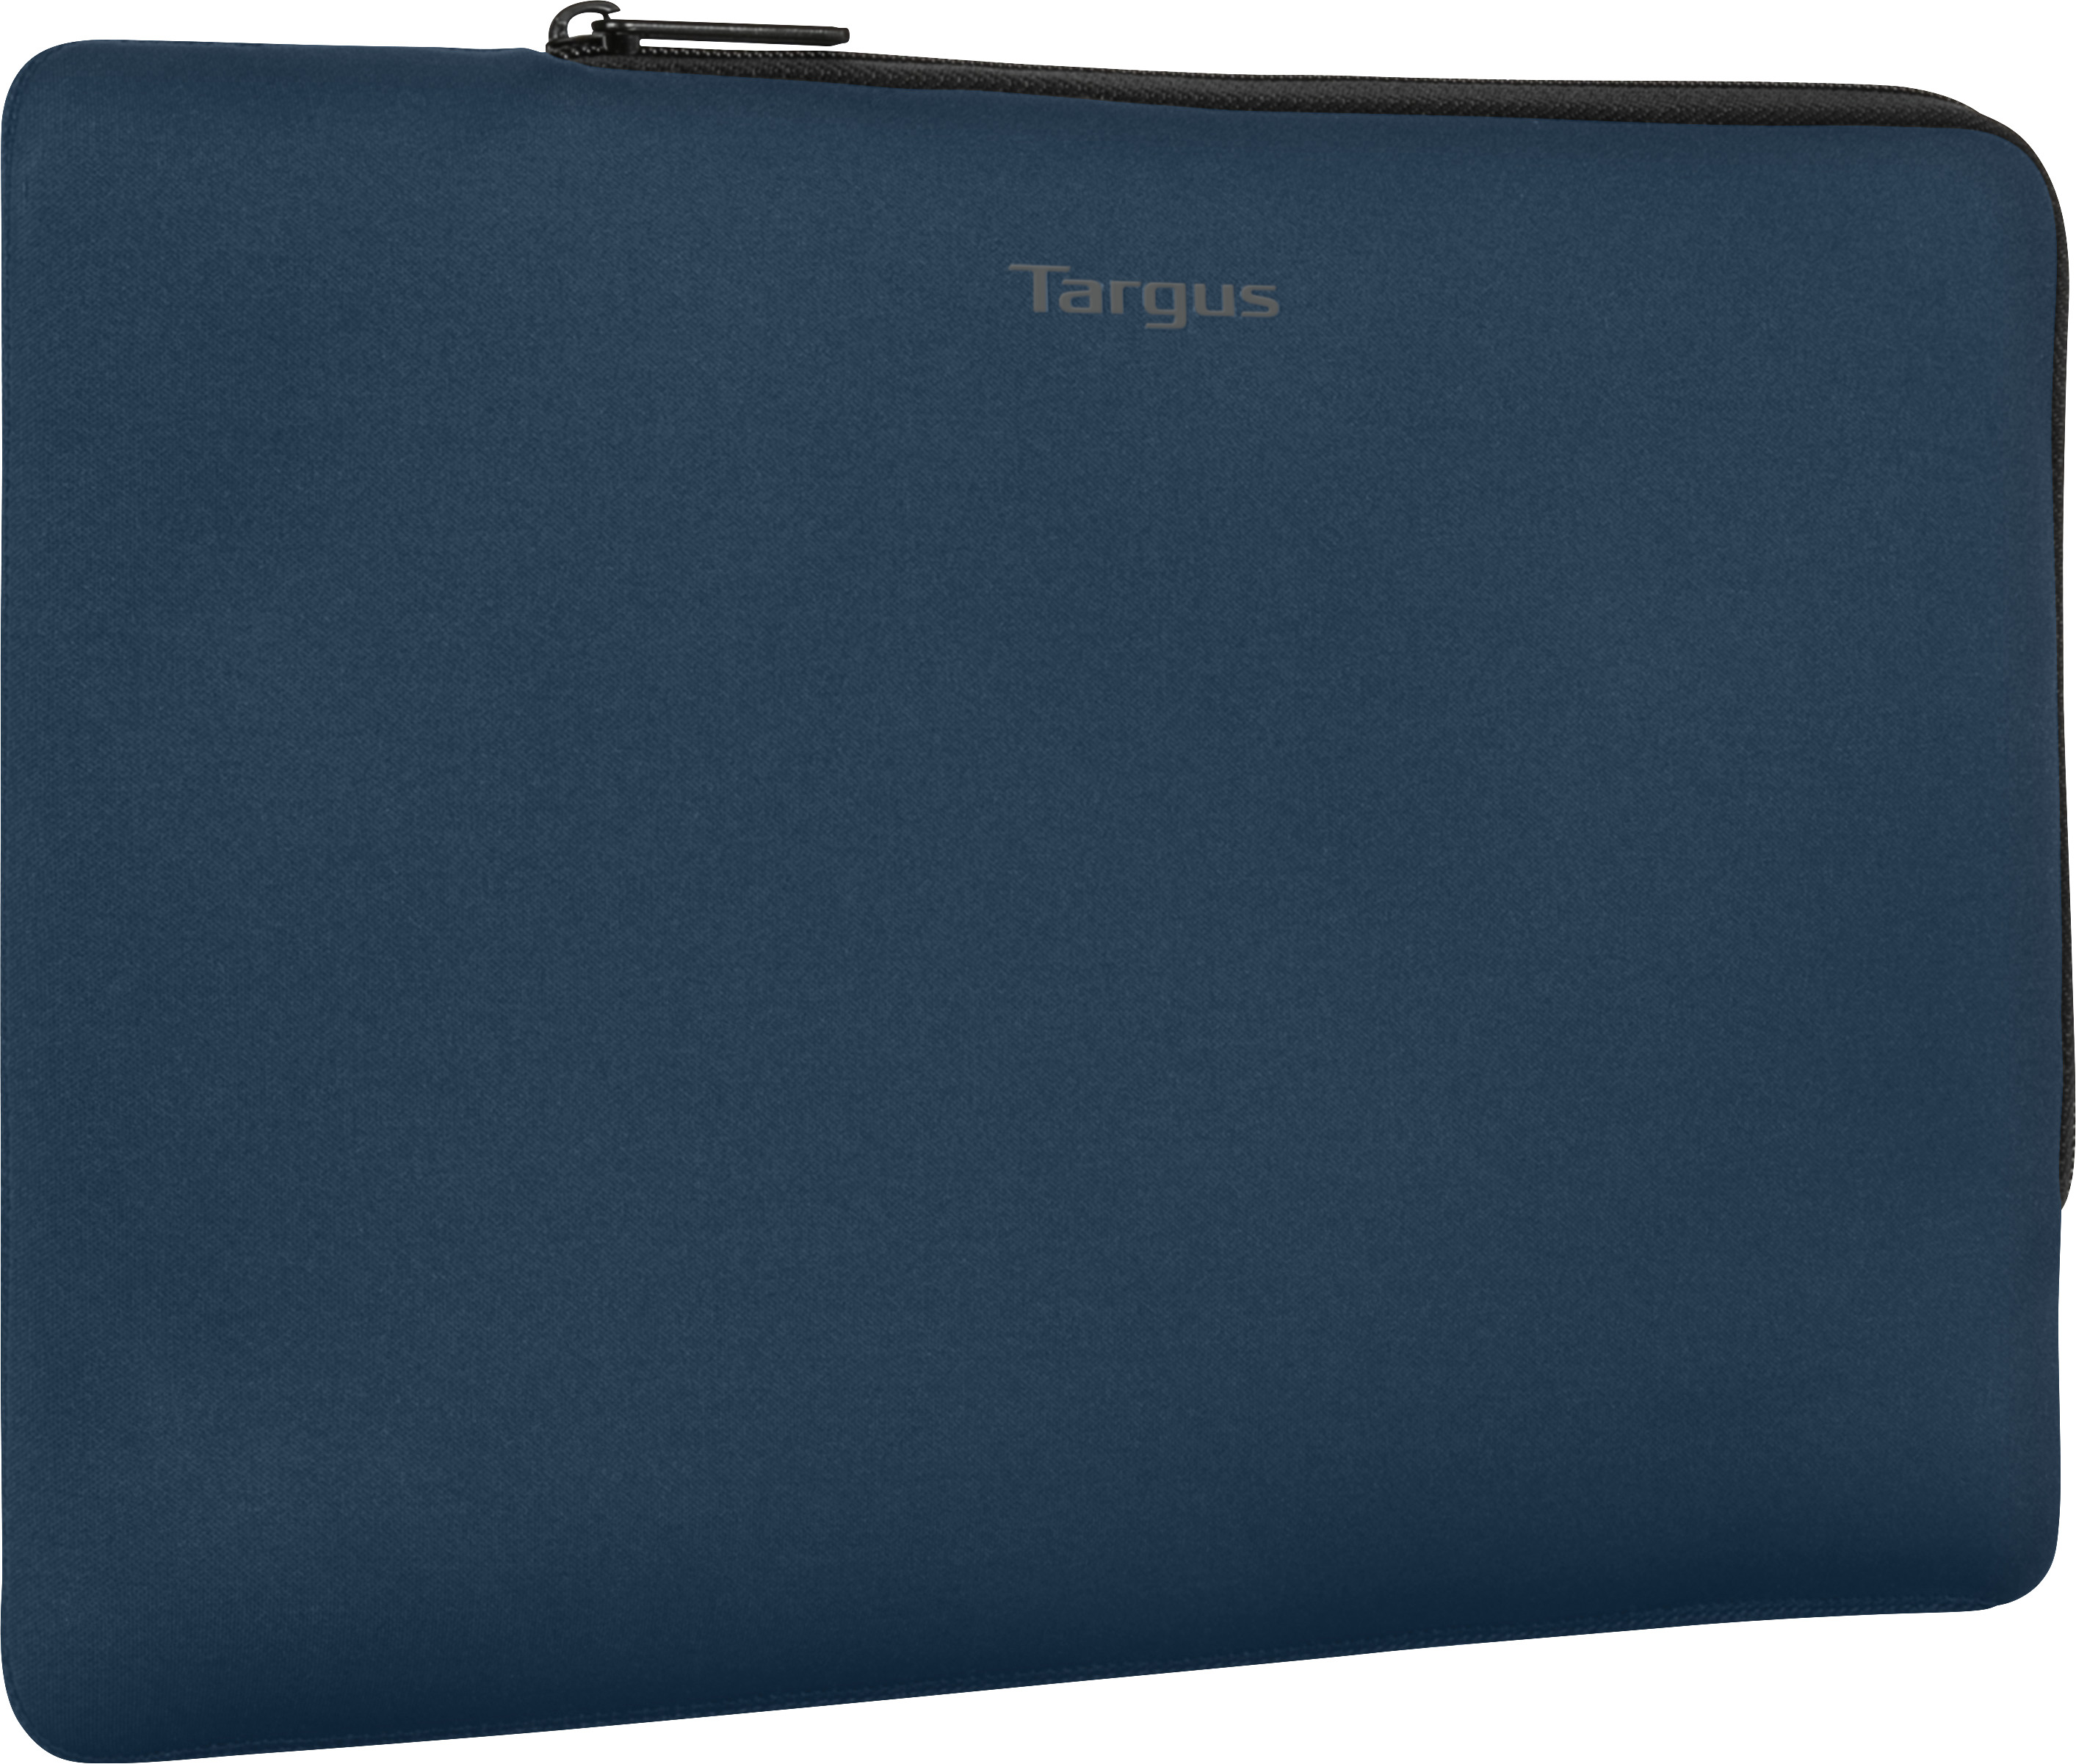 TARGUS Ecosmart MultiFit Sleeve Blue TBS65202GL for Universal 15-16 Inch